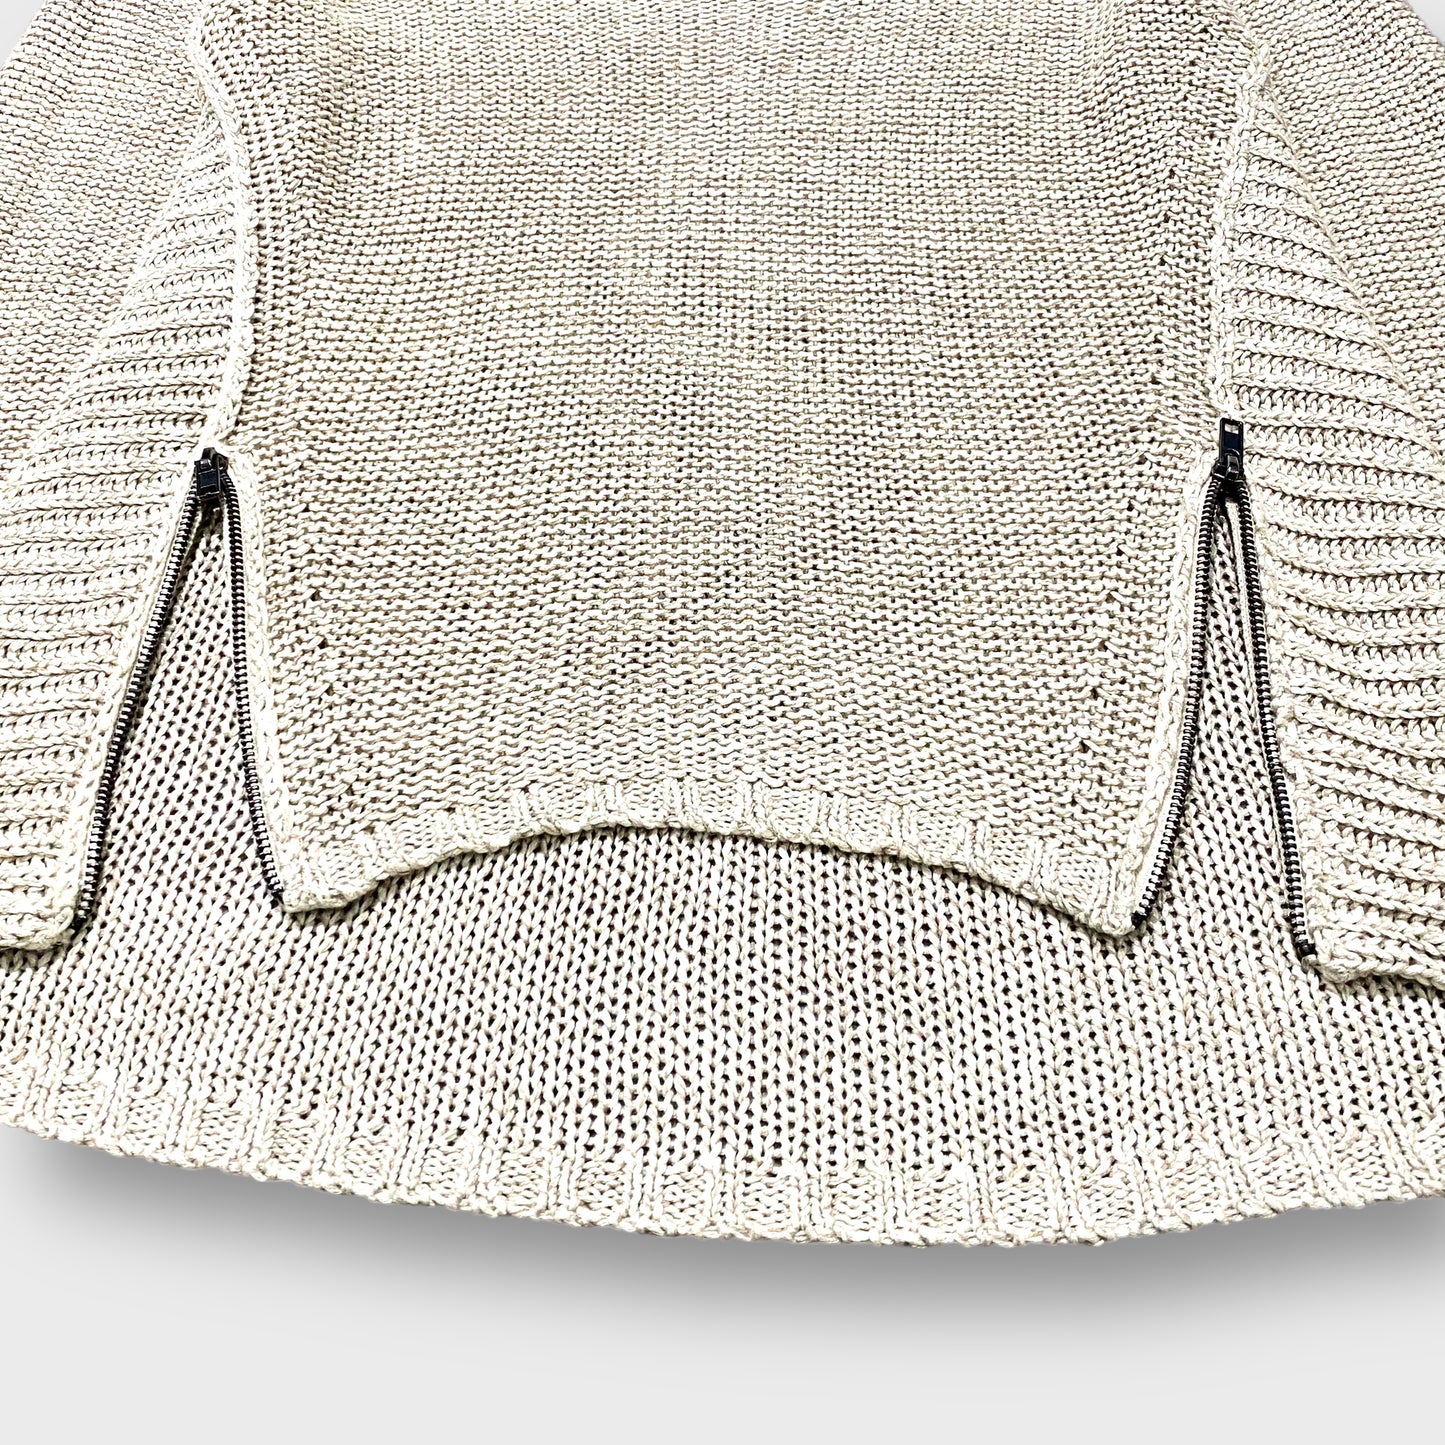 Gimmick ridge knitting sweater